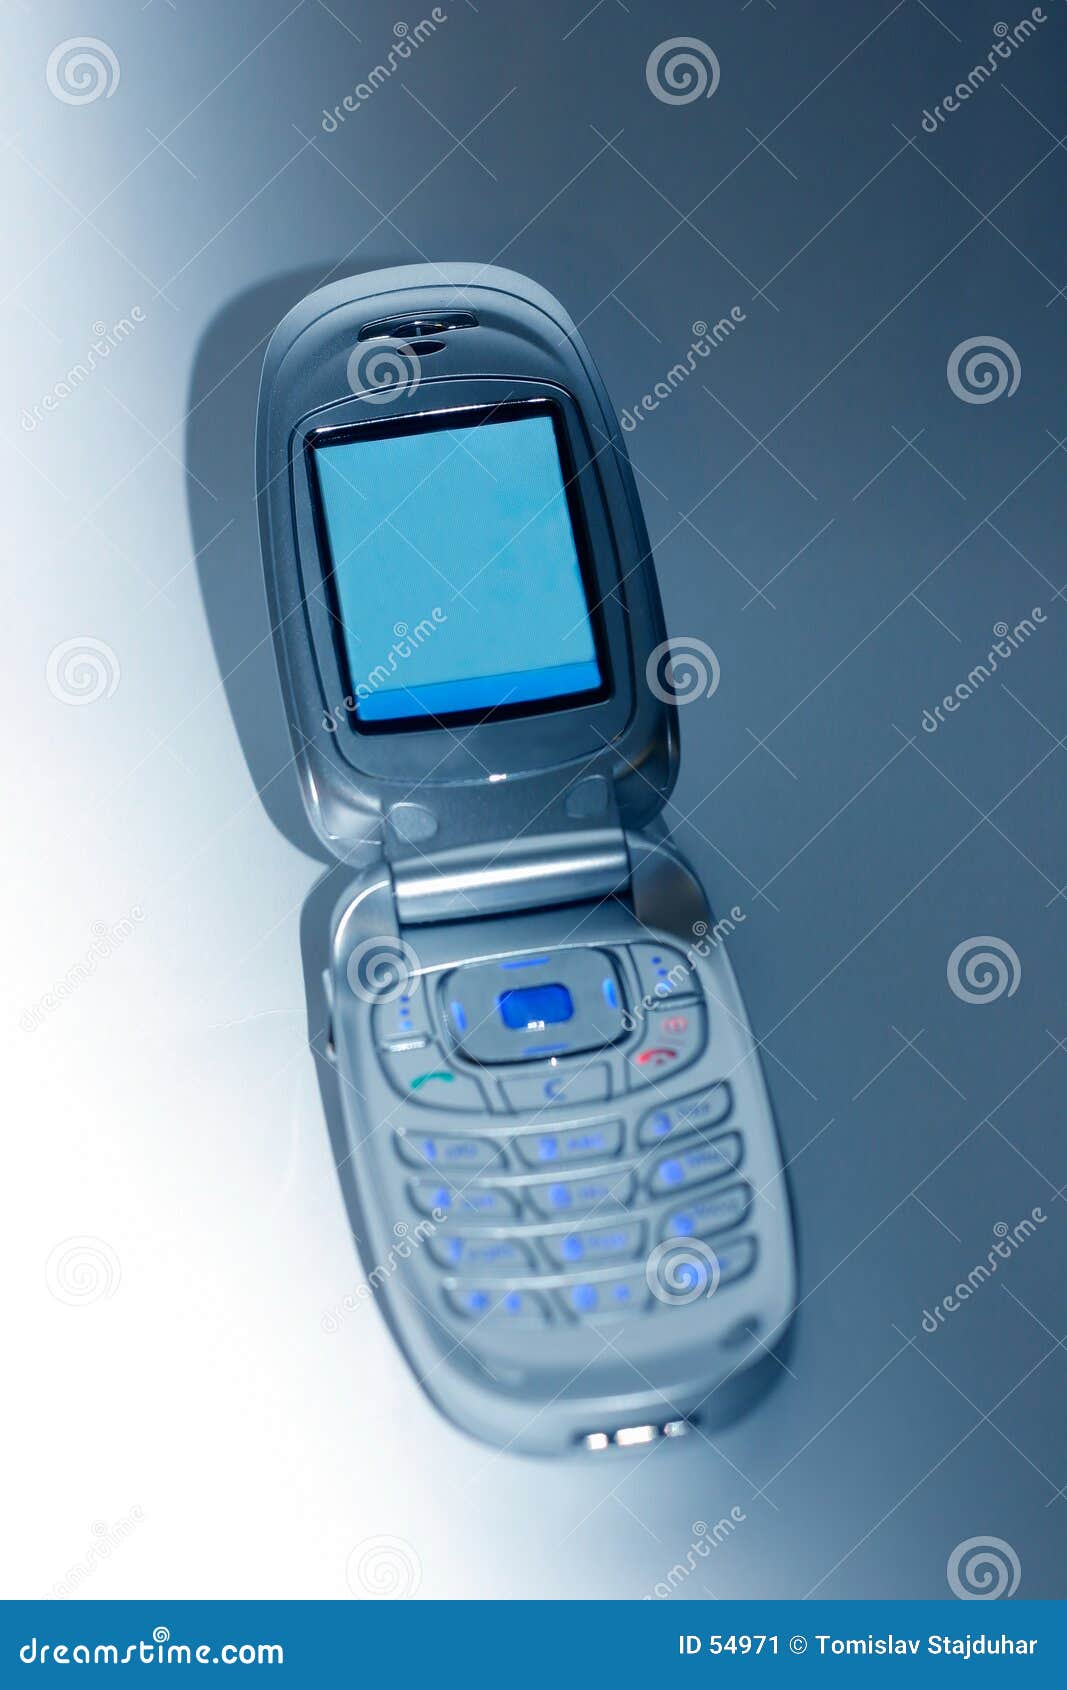 mobile phone samsung